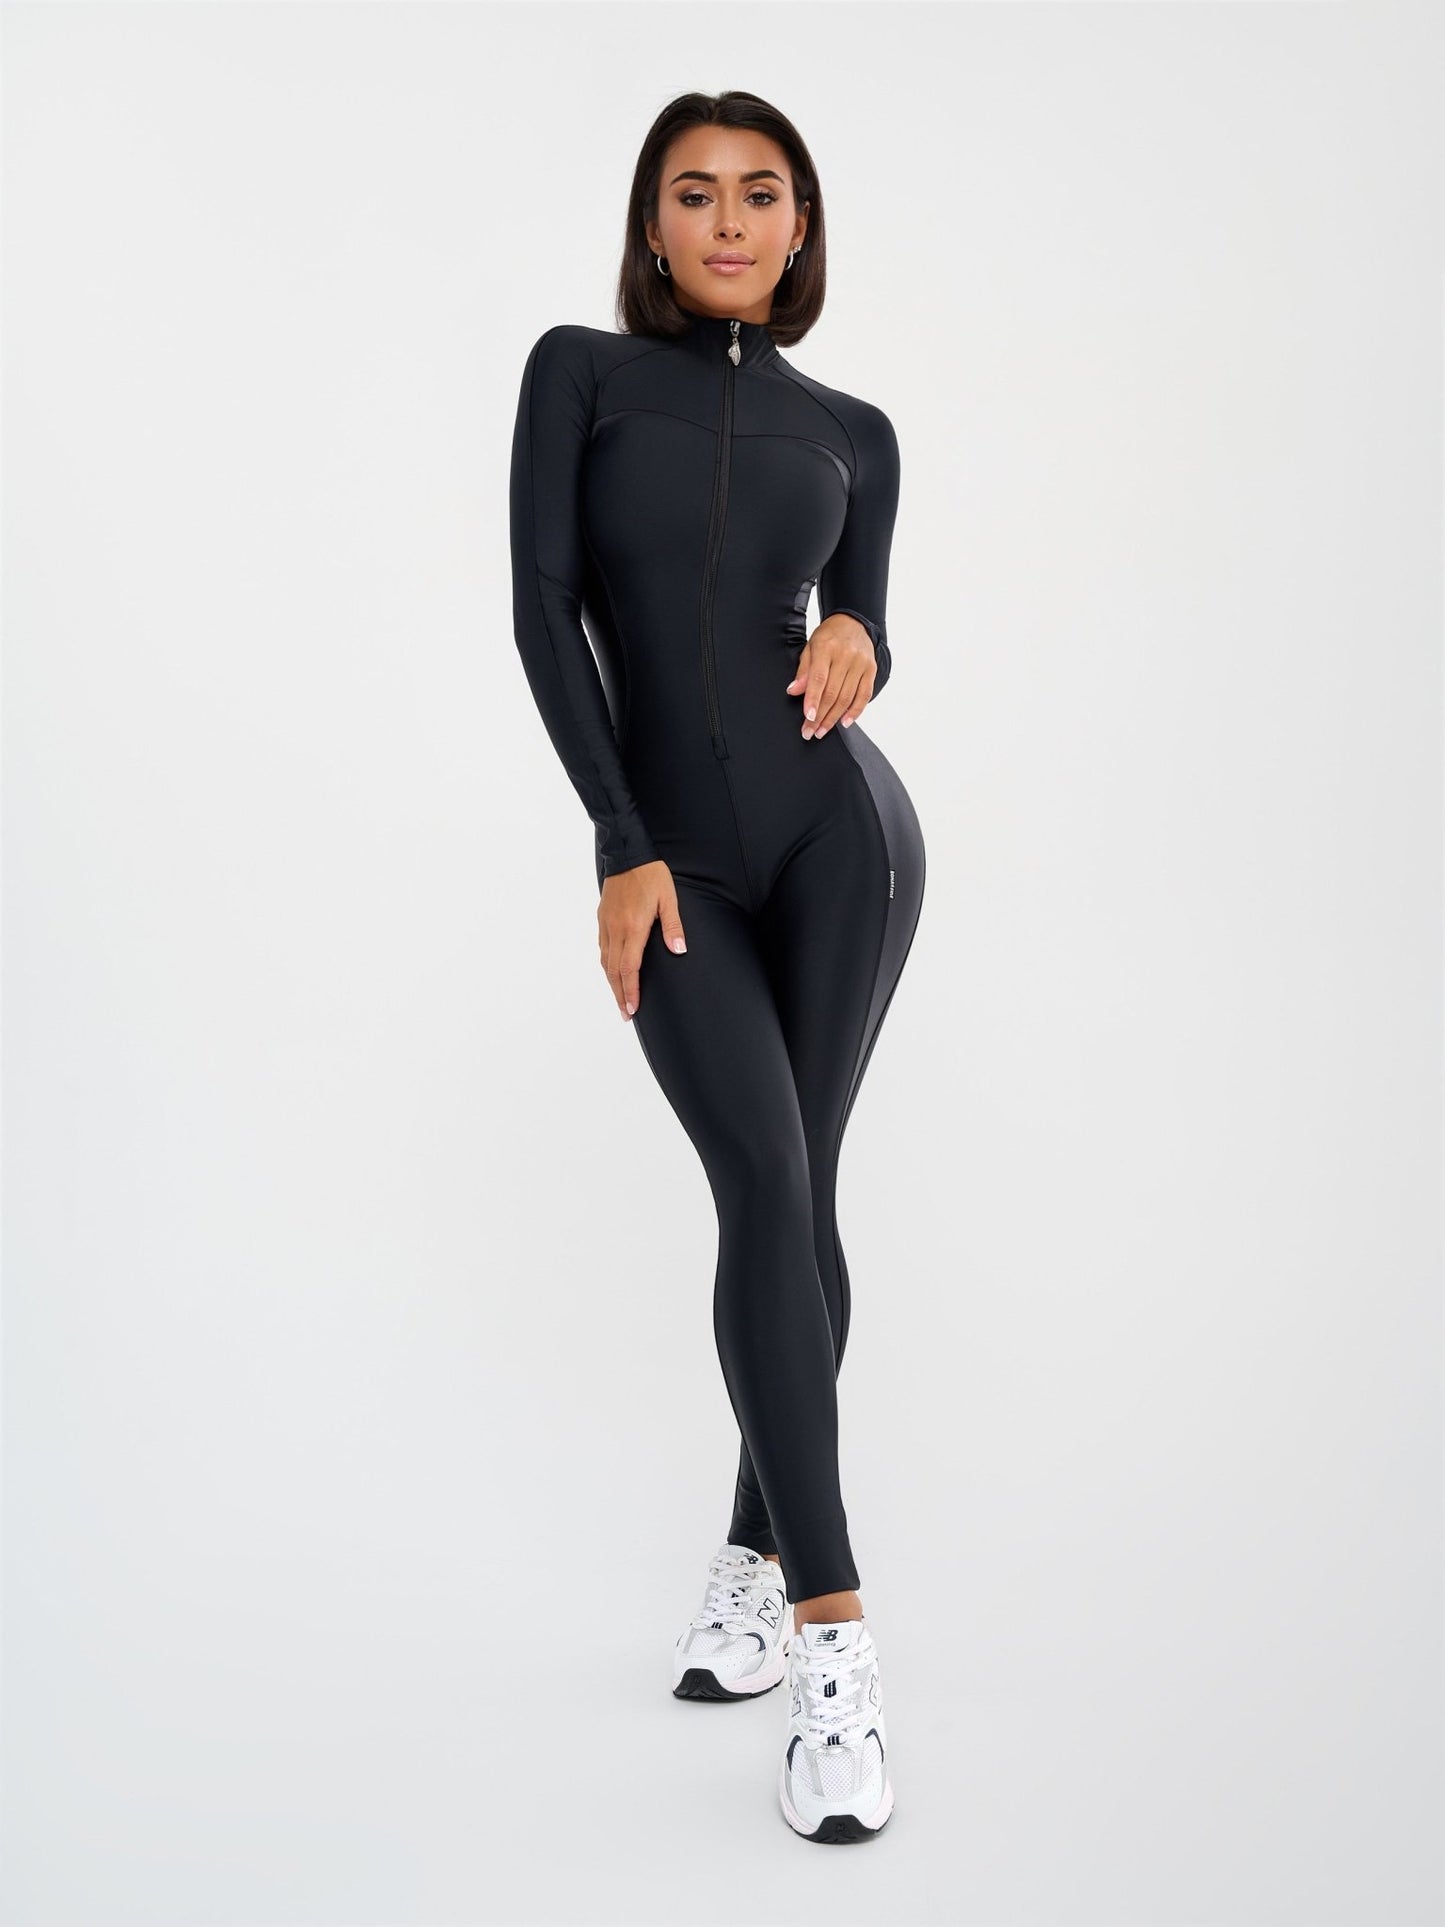 Jumpsuit Elite Body Black Skin - Bona Fide